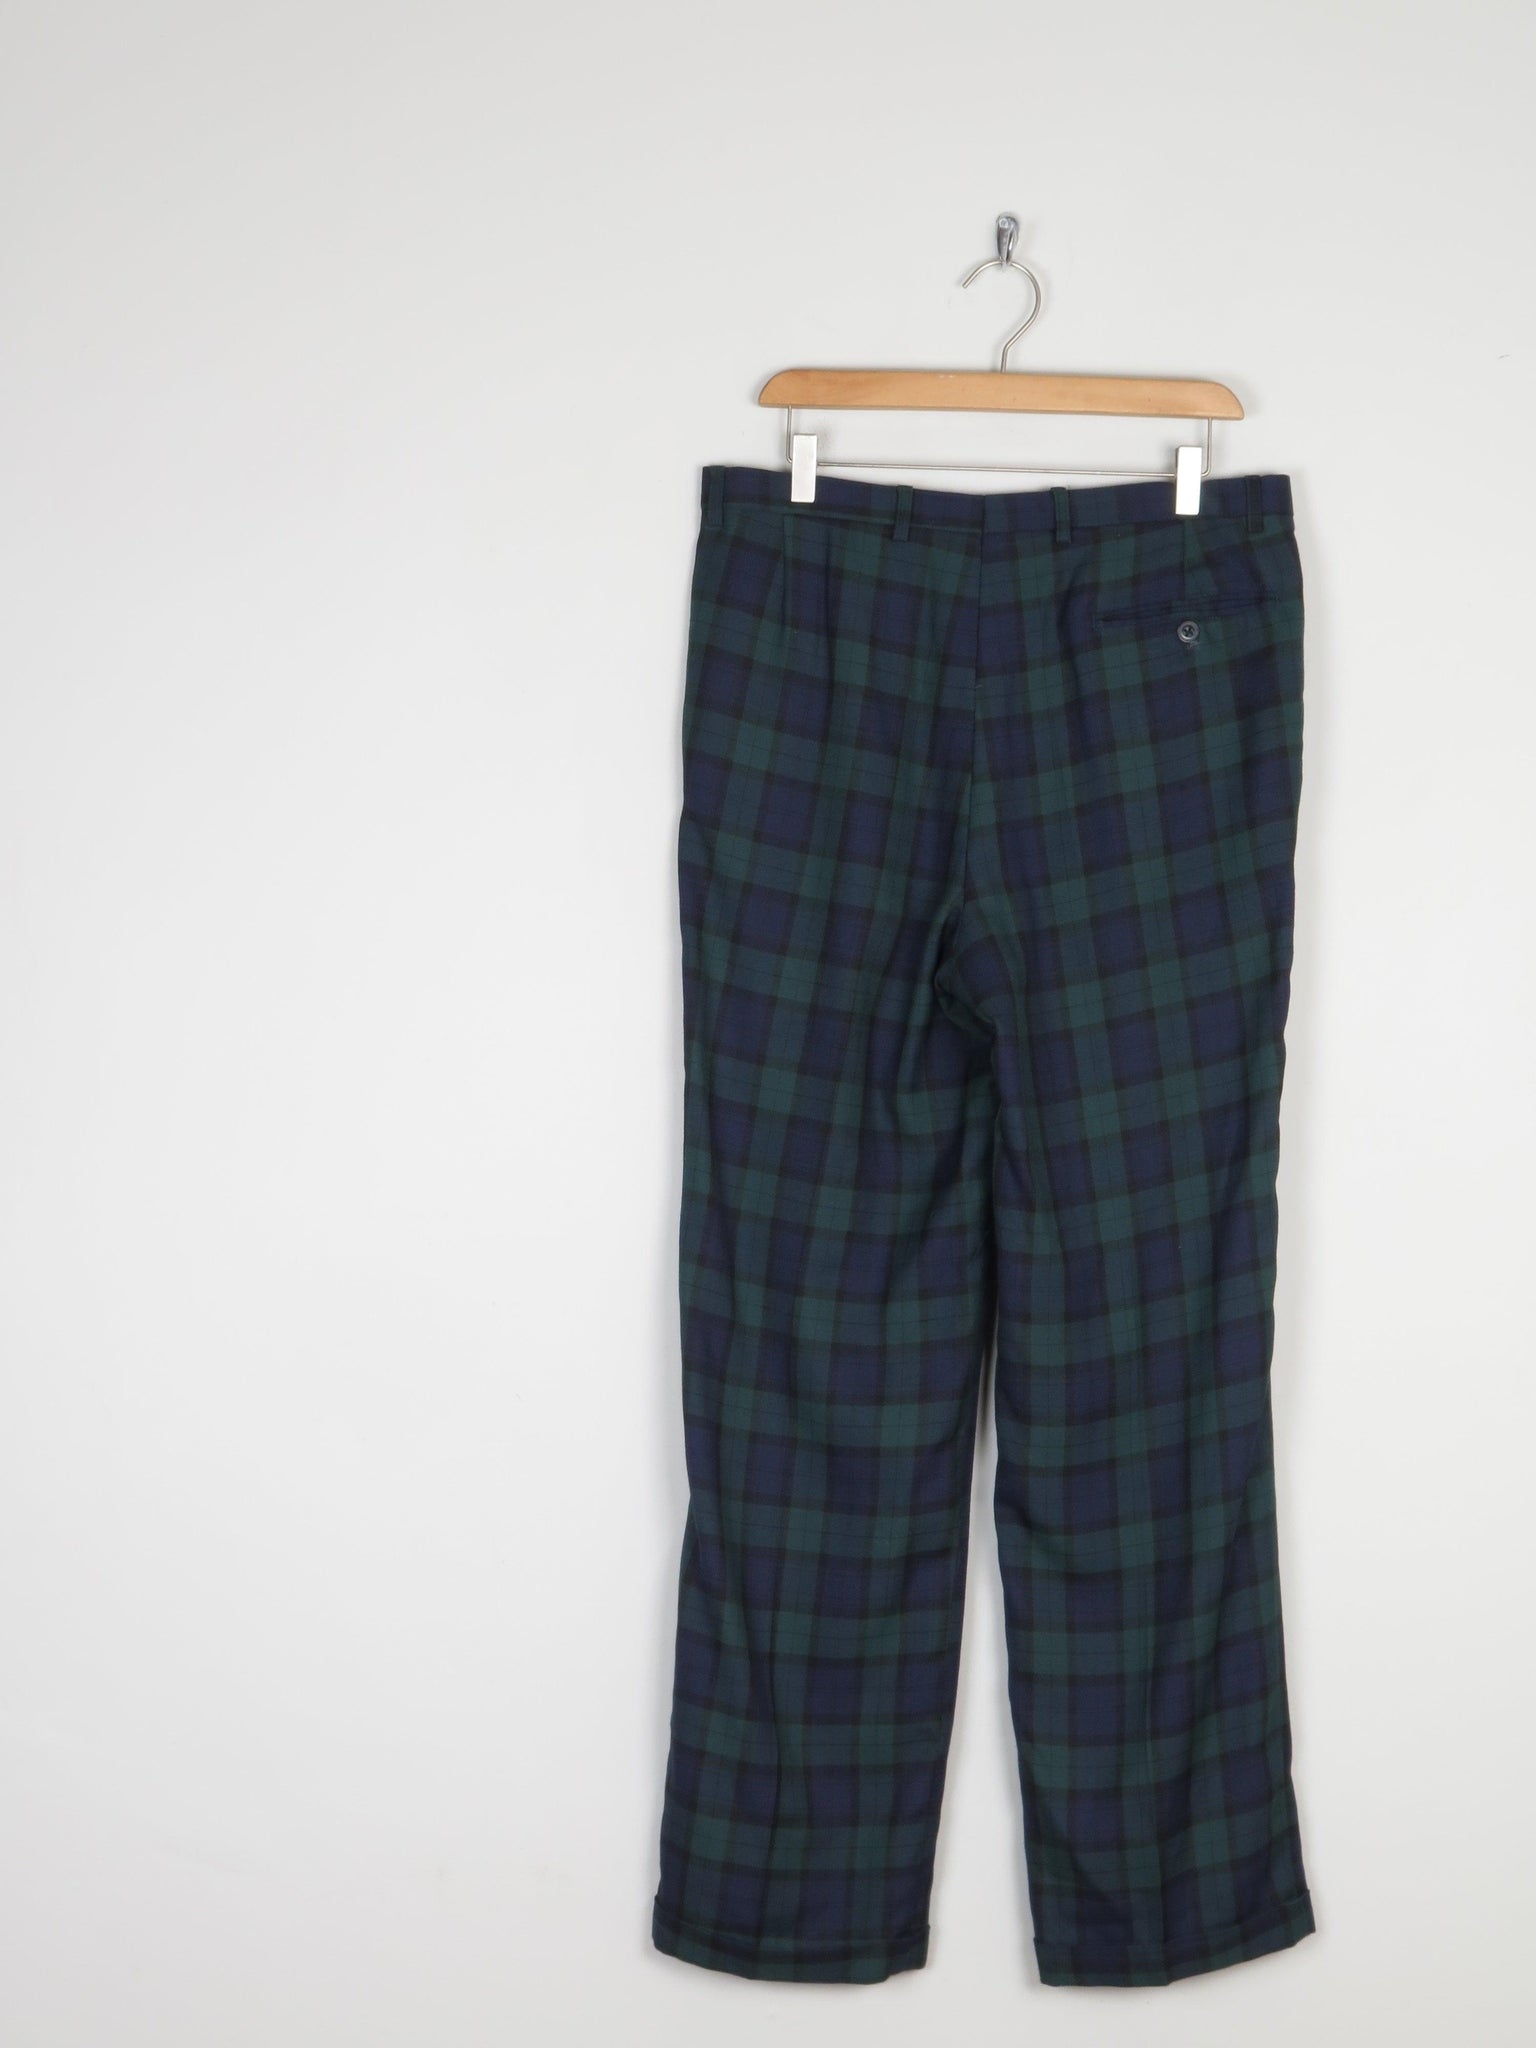 Vintage Men's Navy & Green Tartan Trousers 32" - The Harlequin